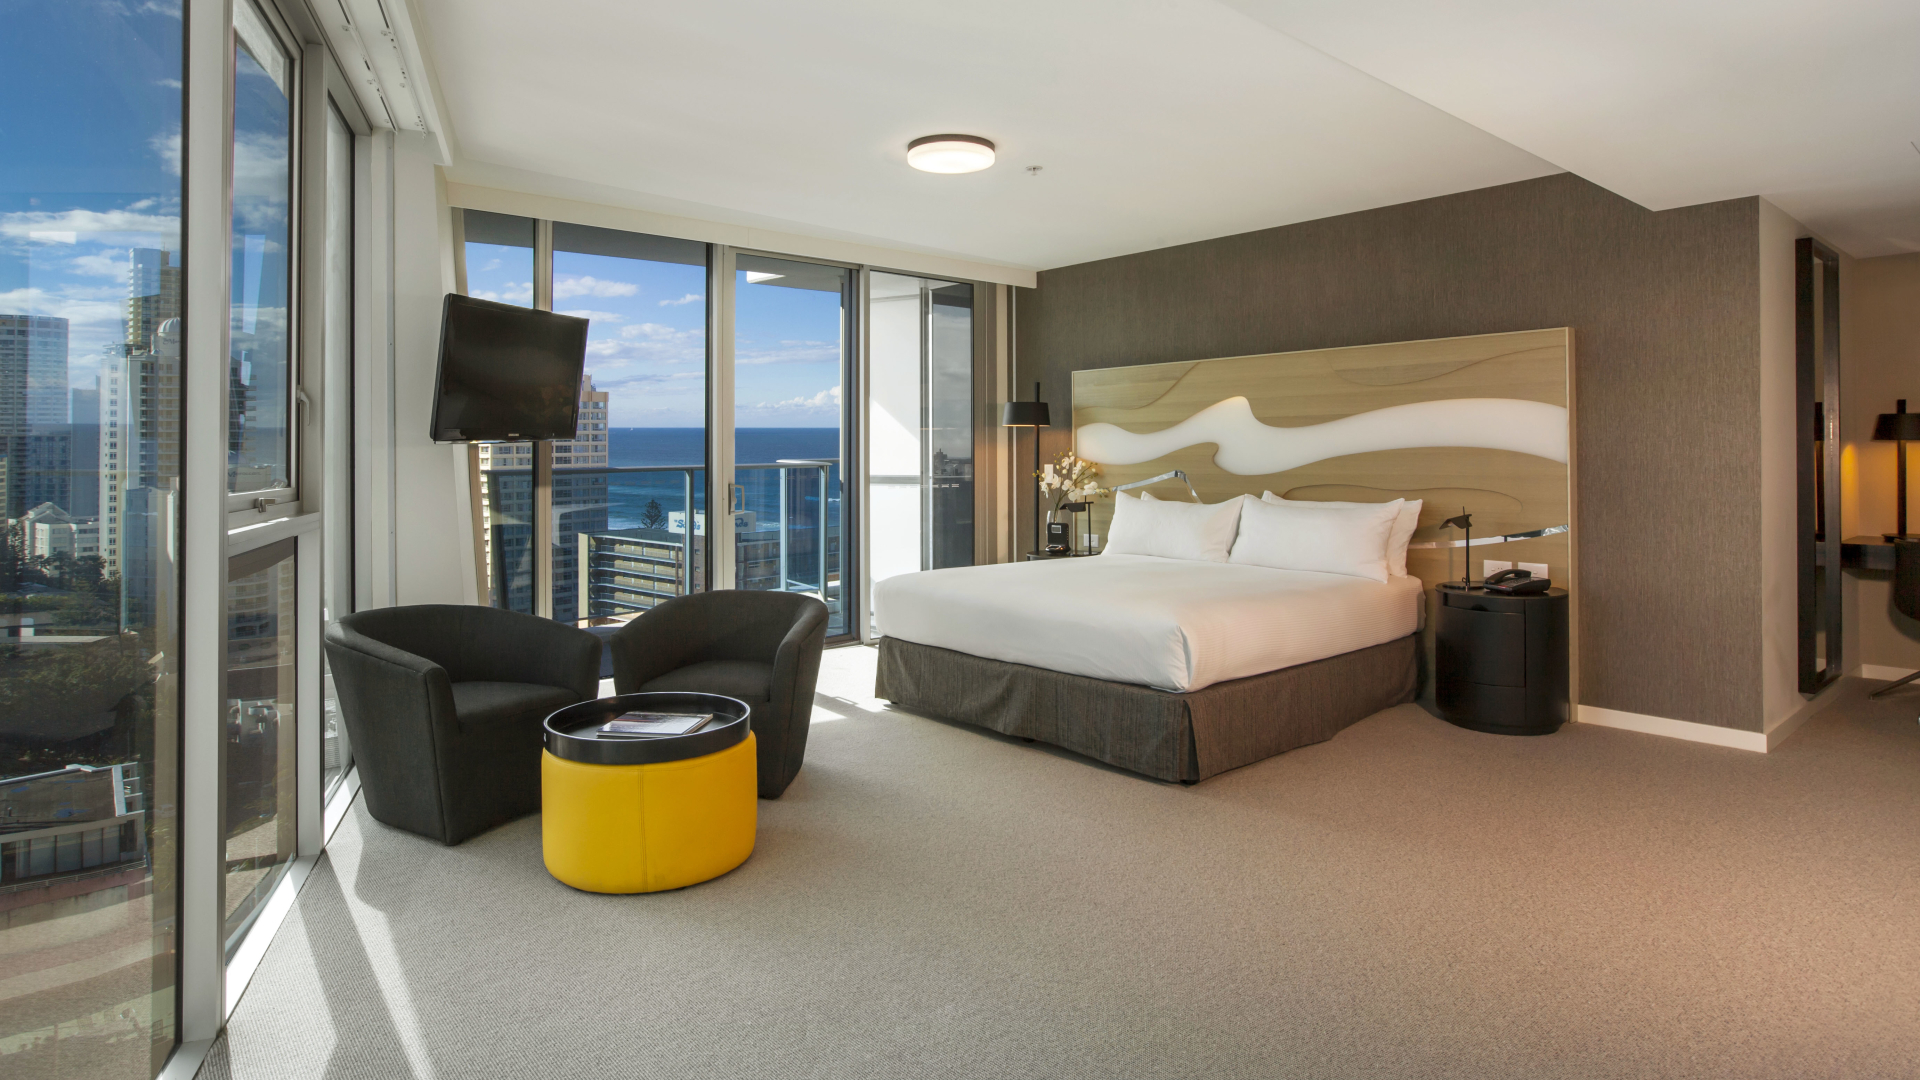 Photo of Hilton Surfers Paradise Hotel & Residences, Surfer's Paradise, Queensland, Australia